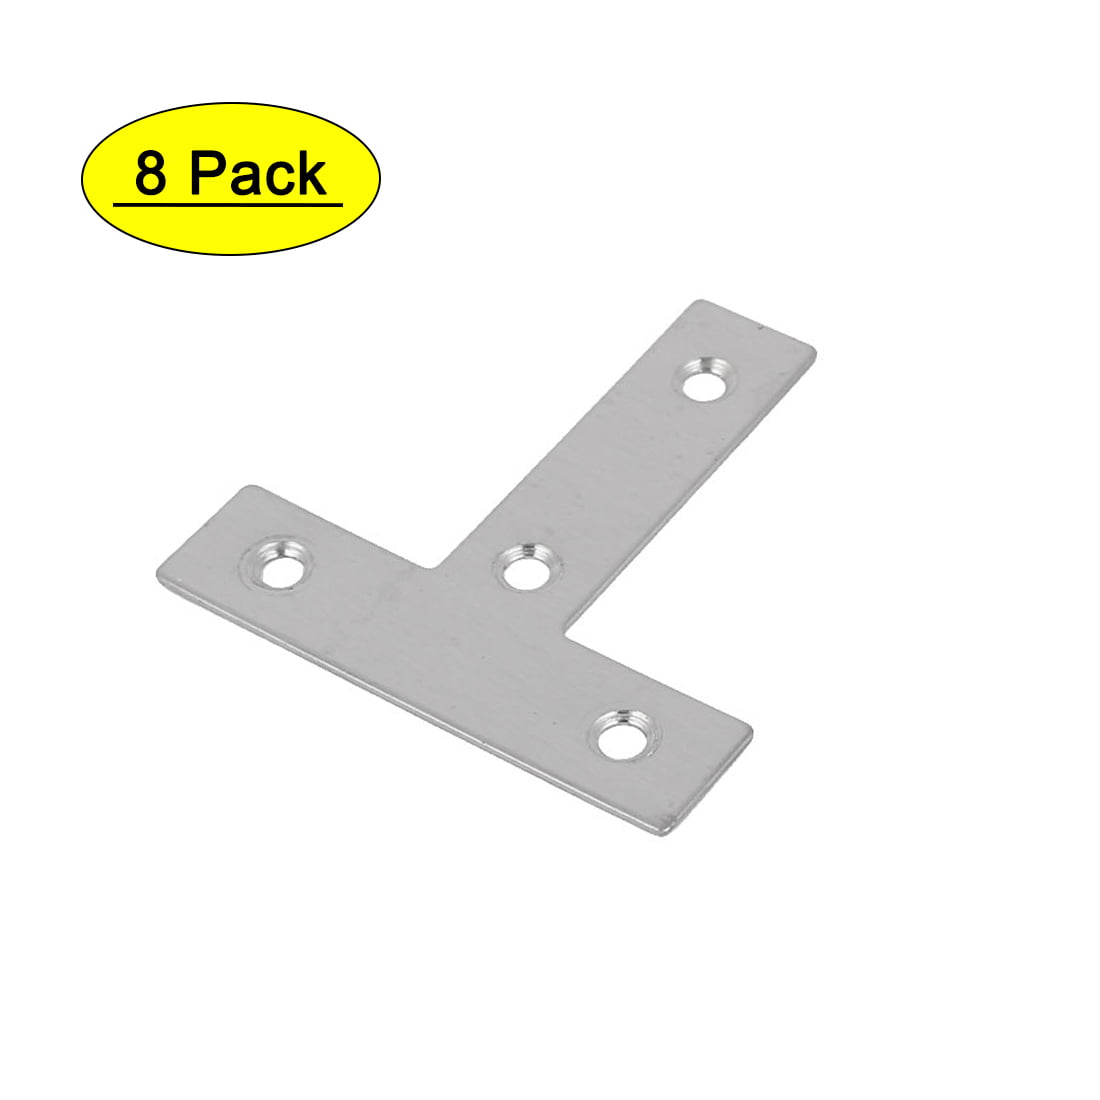 Furniture Right Angle Bracket Support Fastener Corner Braces 8pcs